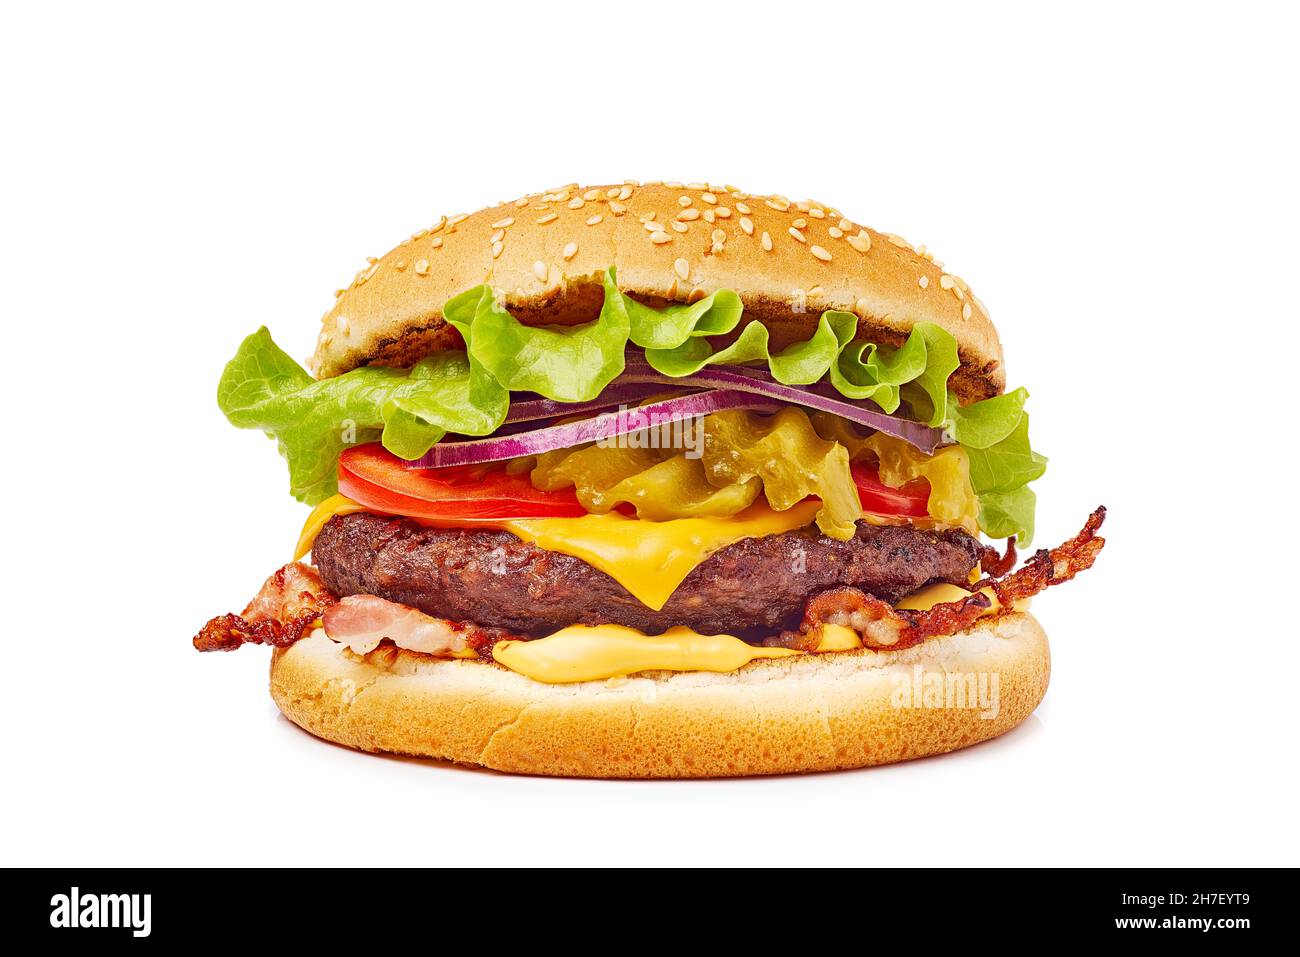 Tasty burger classic american hamburger on white background Stock Photo